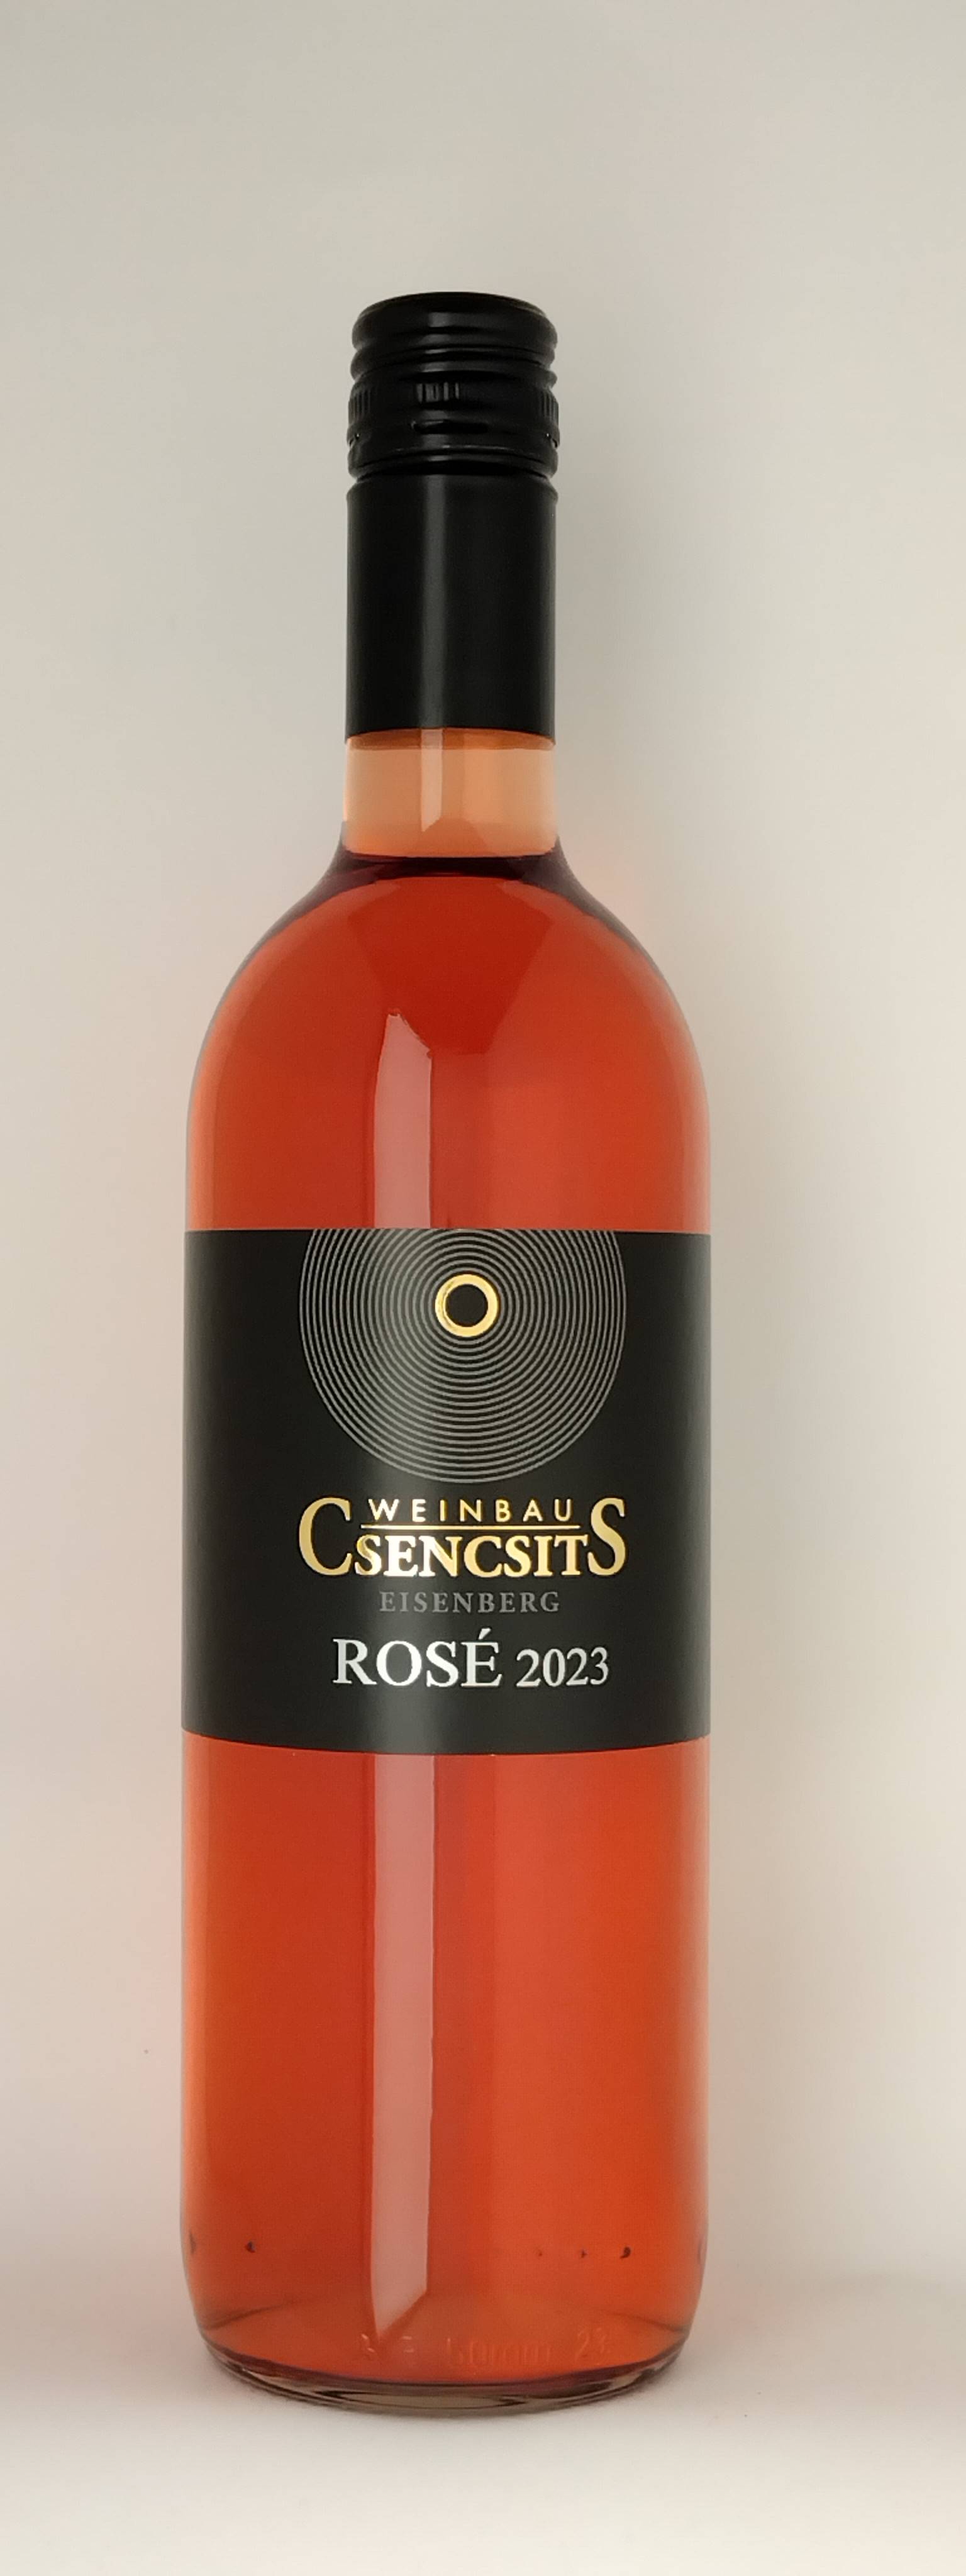 Vinothek Eisenberg Rose 2023 Csencsits Erwin